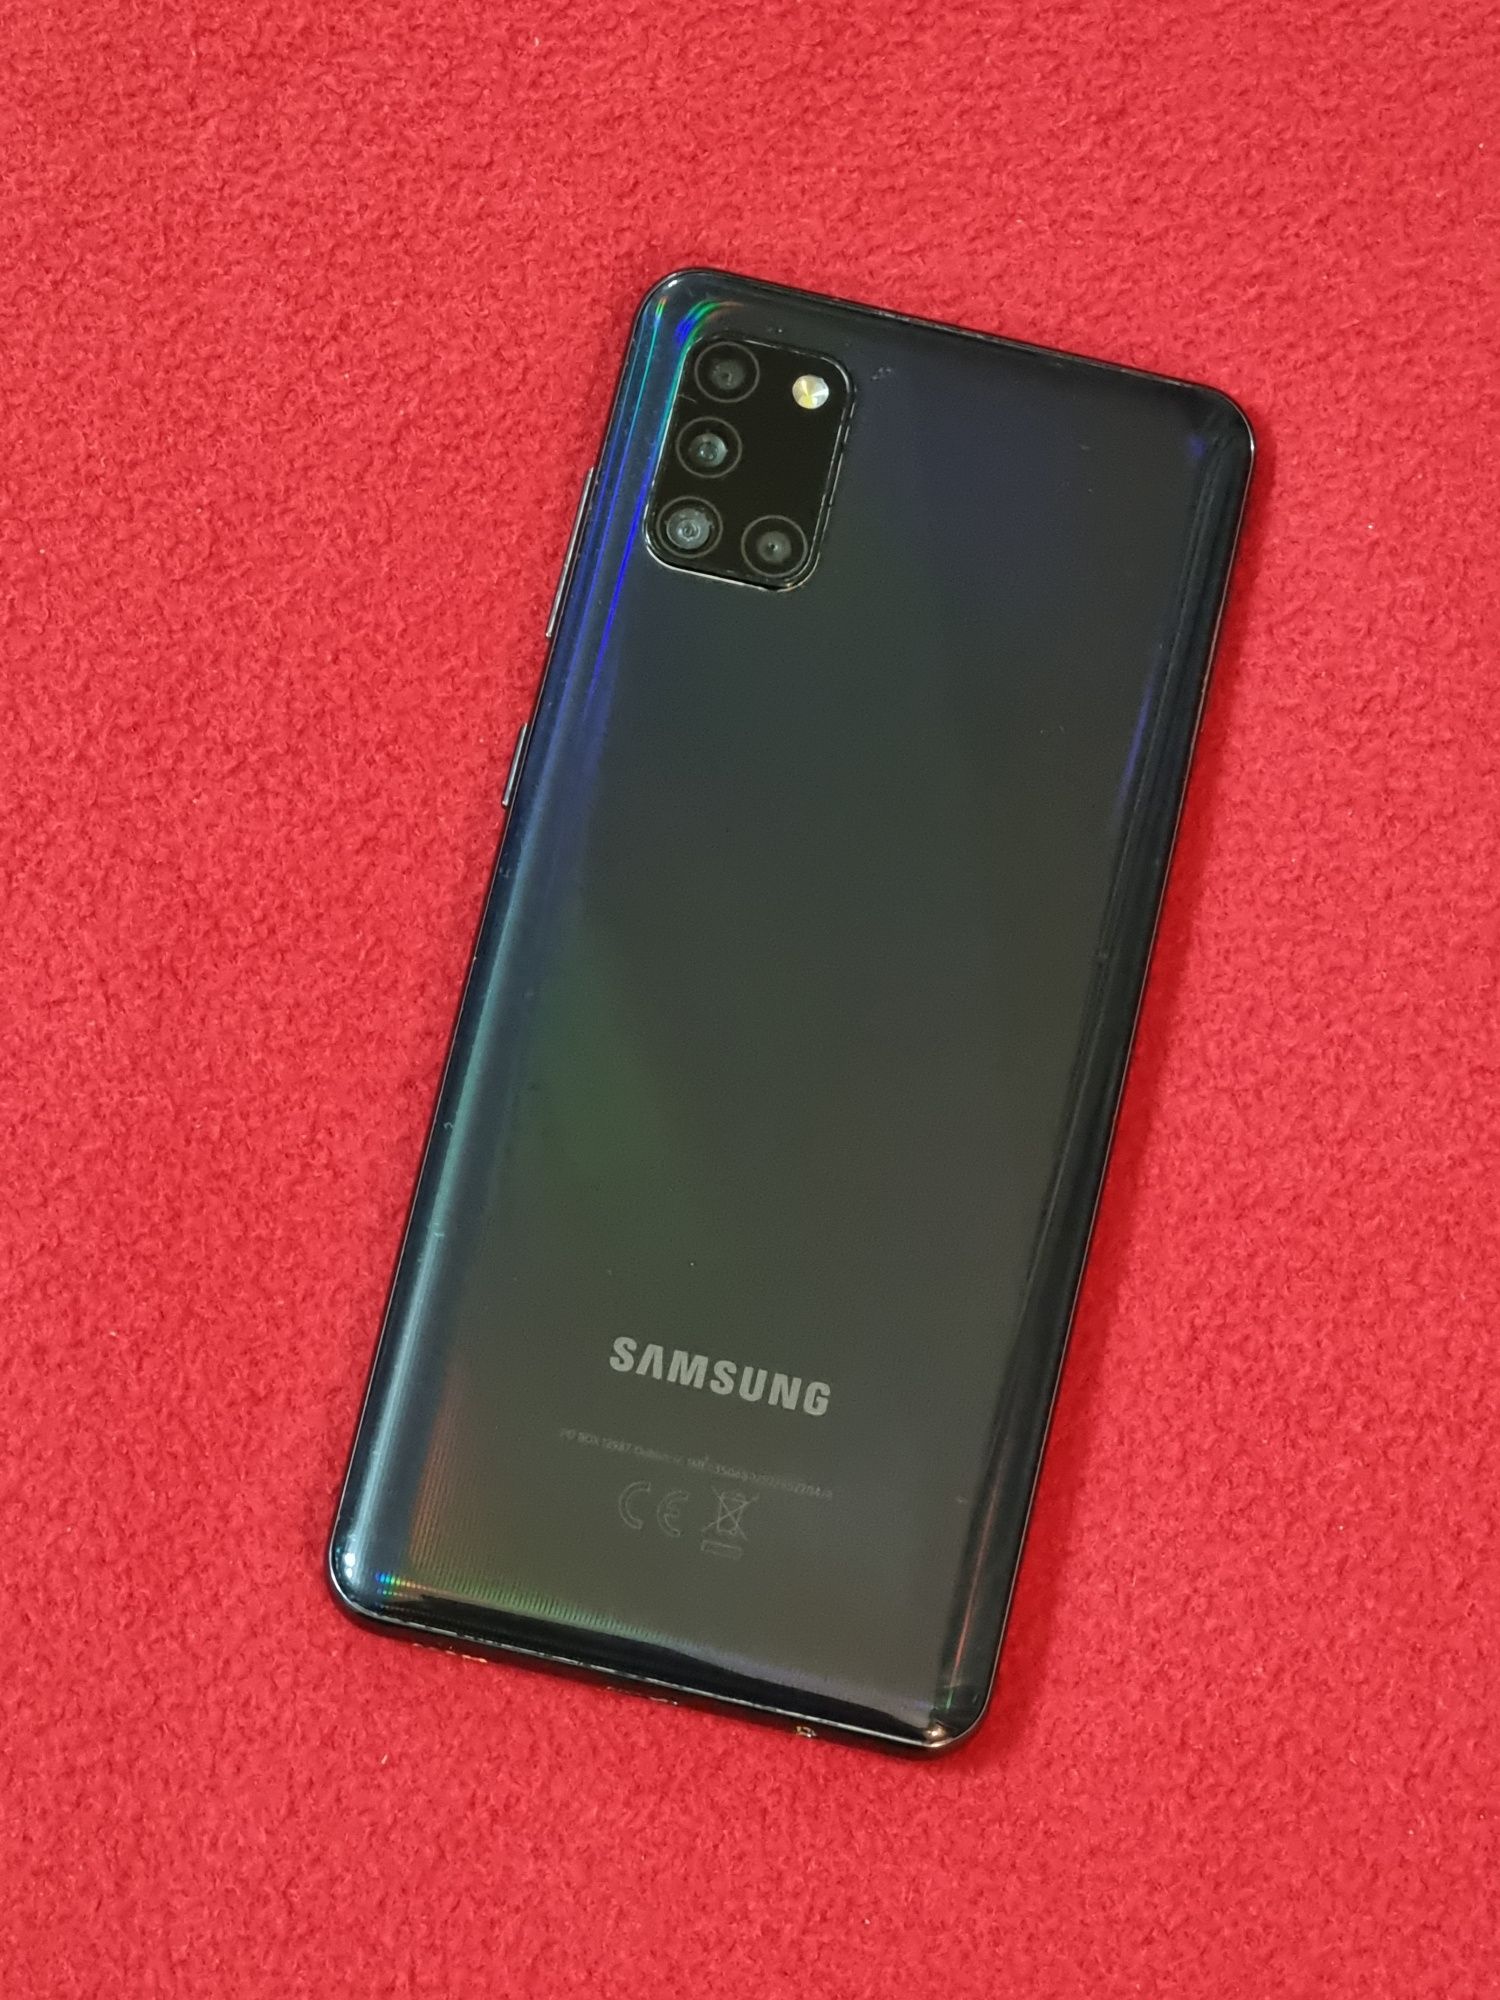 Samsung Galaxy A31 Negru 64Gb, are o fisura subțire în partea de jos.